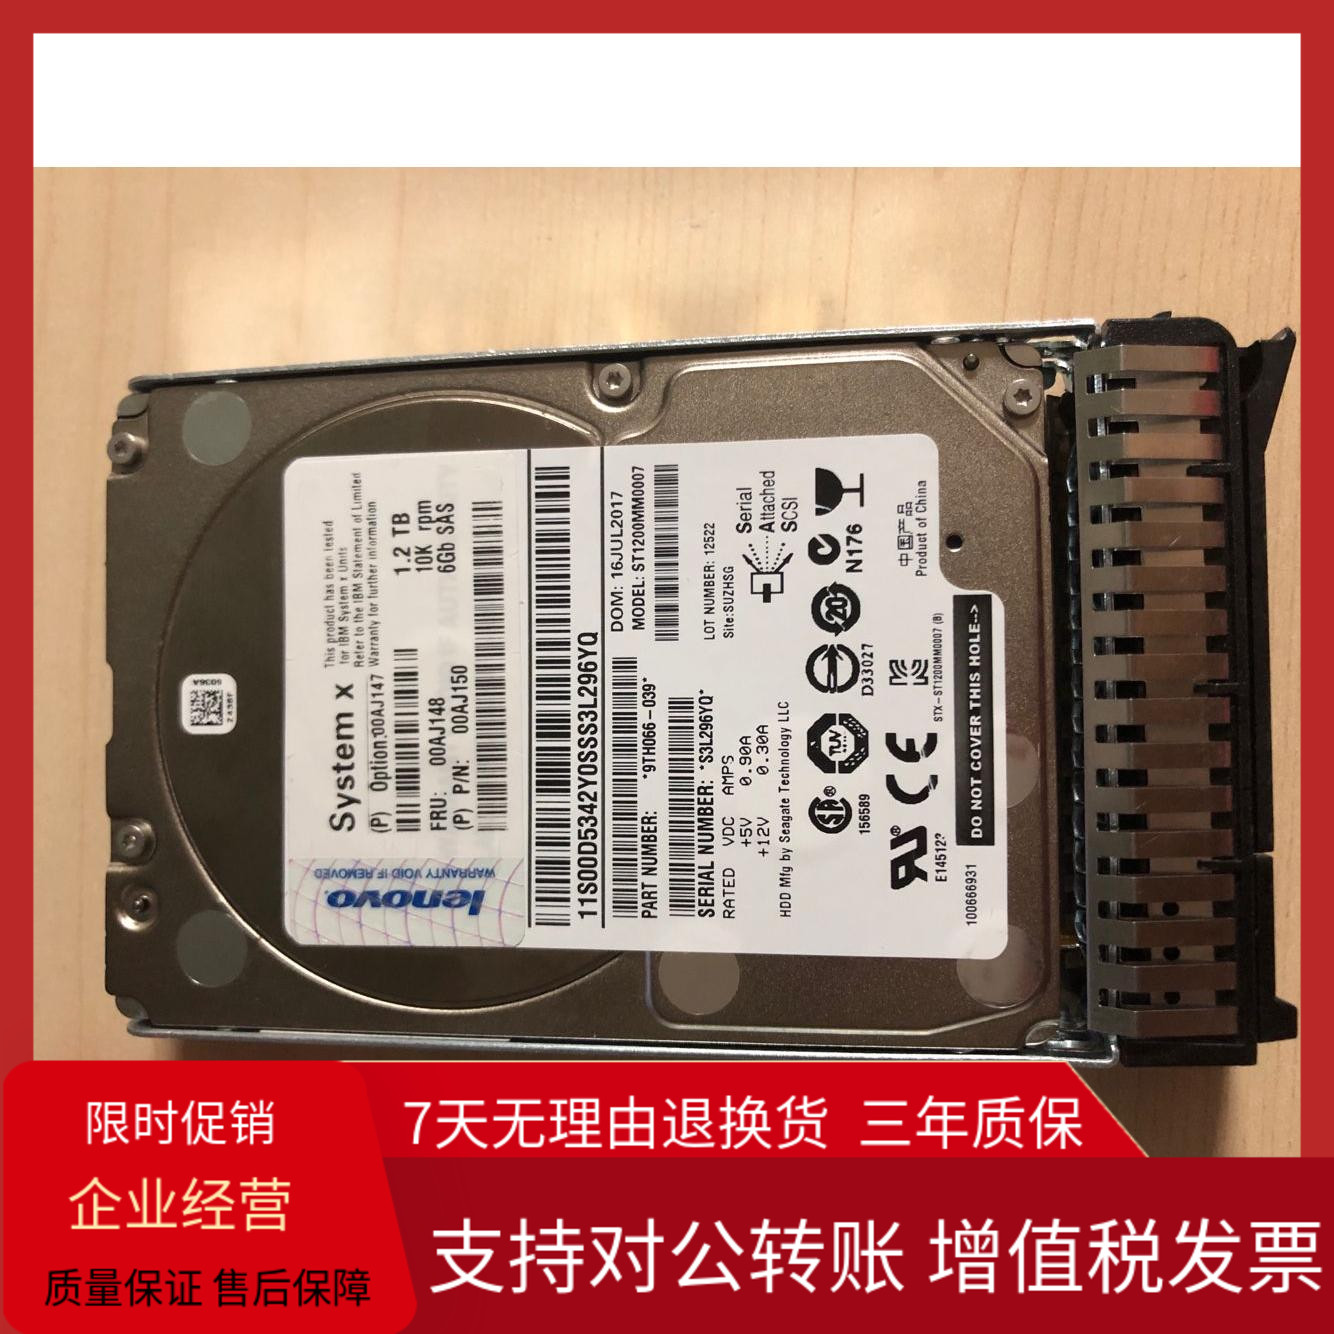 ibm x3650 m3 x3650 m4 1.2t 10k 2.5 inch sas 00ad075 server hard disk